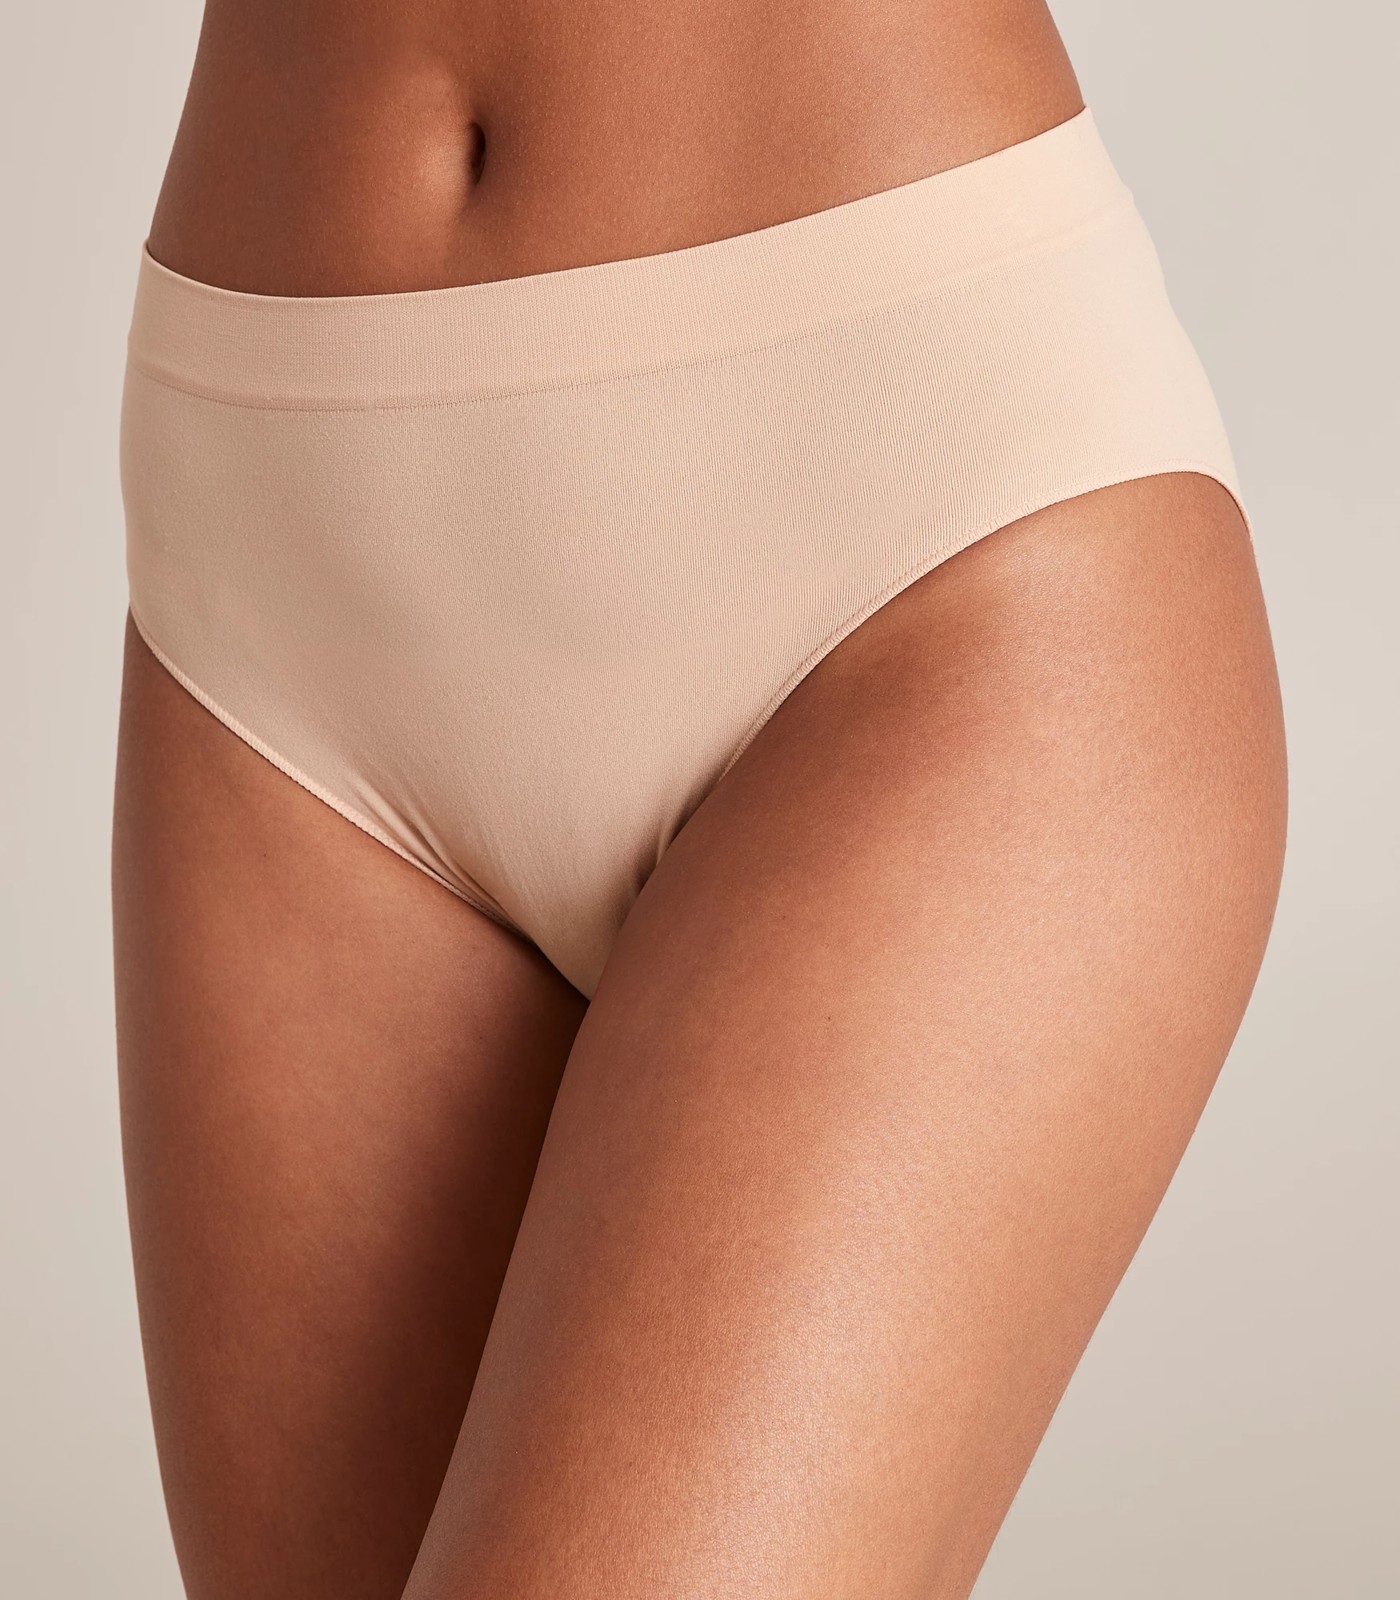 Women's Seamless Underwear Australia, Buy Women's Underwear